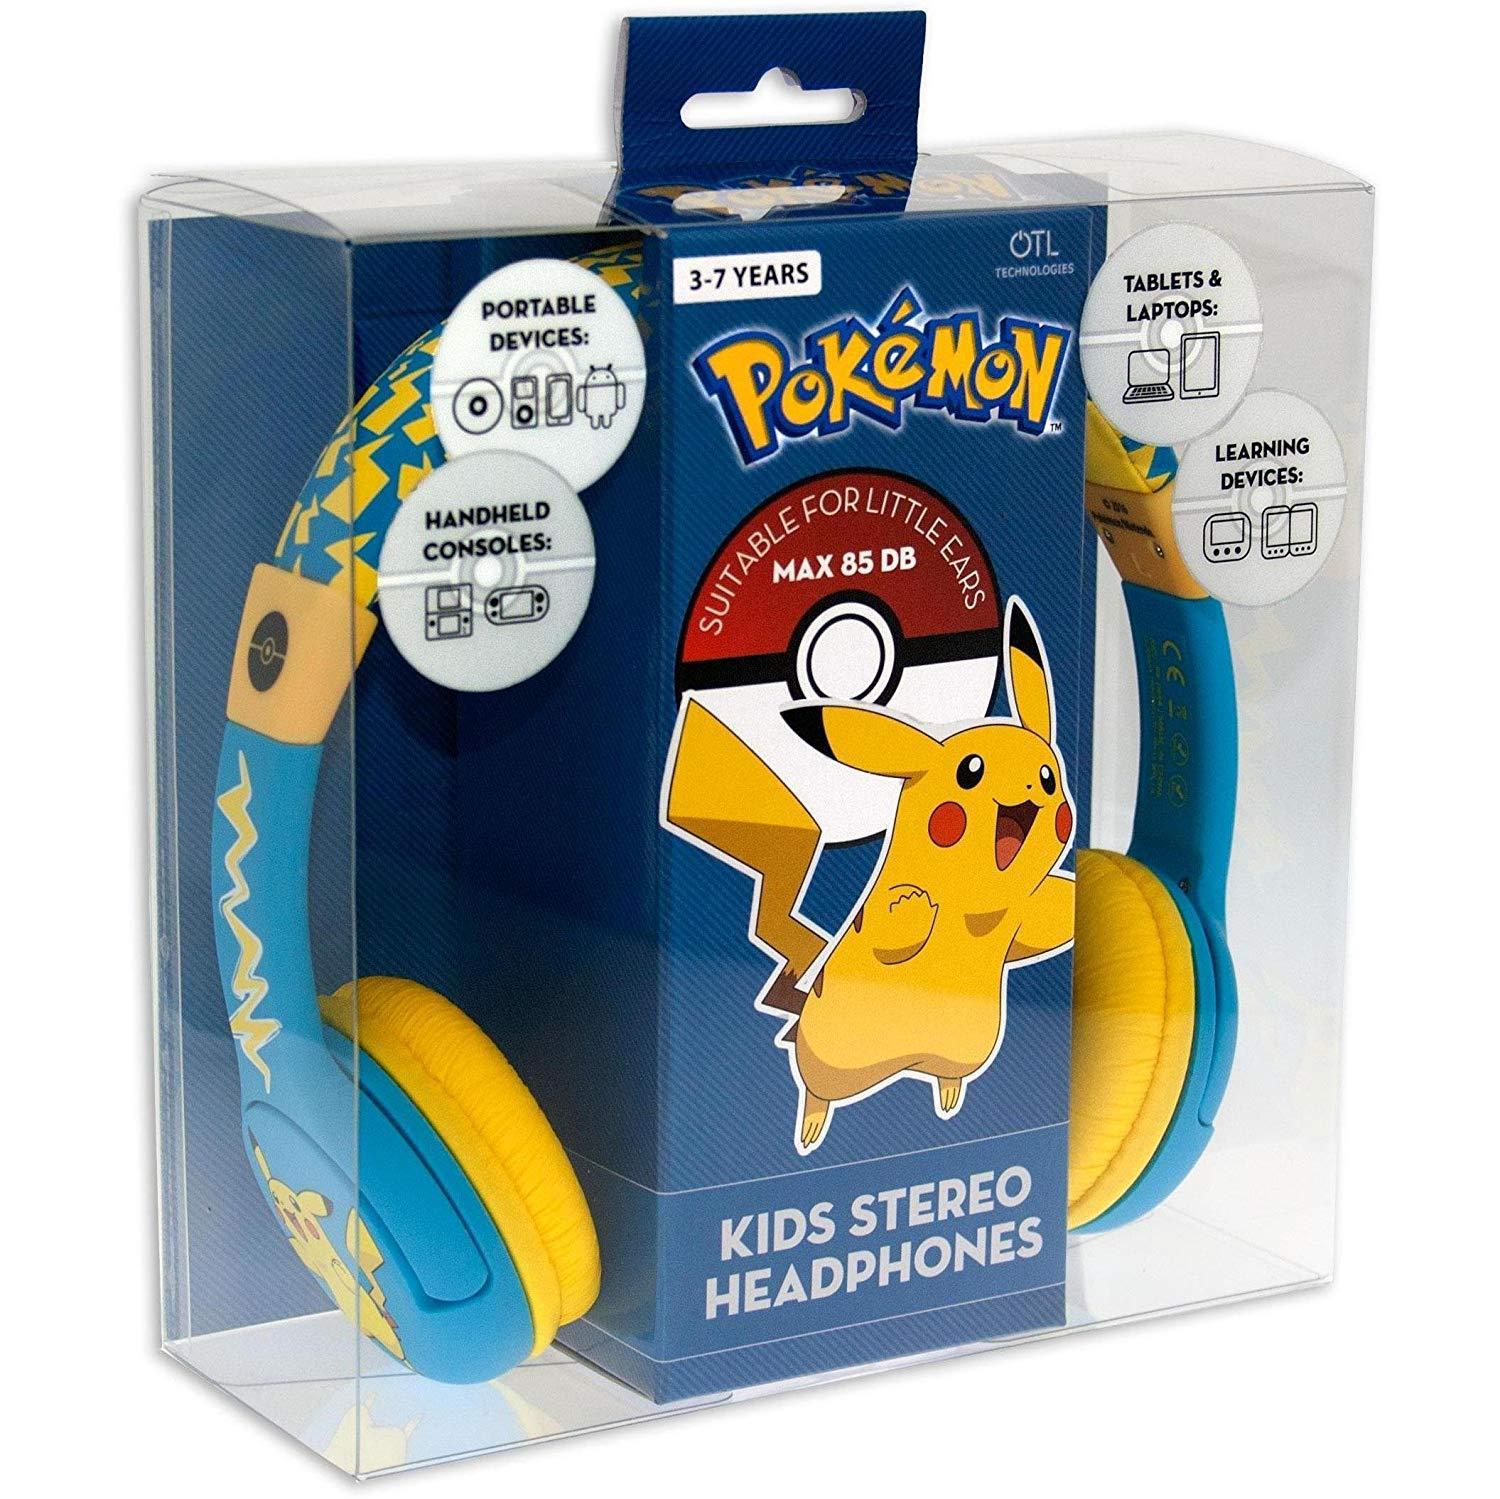 OTL - On-Ear Junior Headphone Pikachu